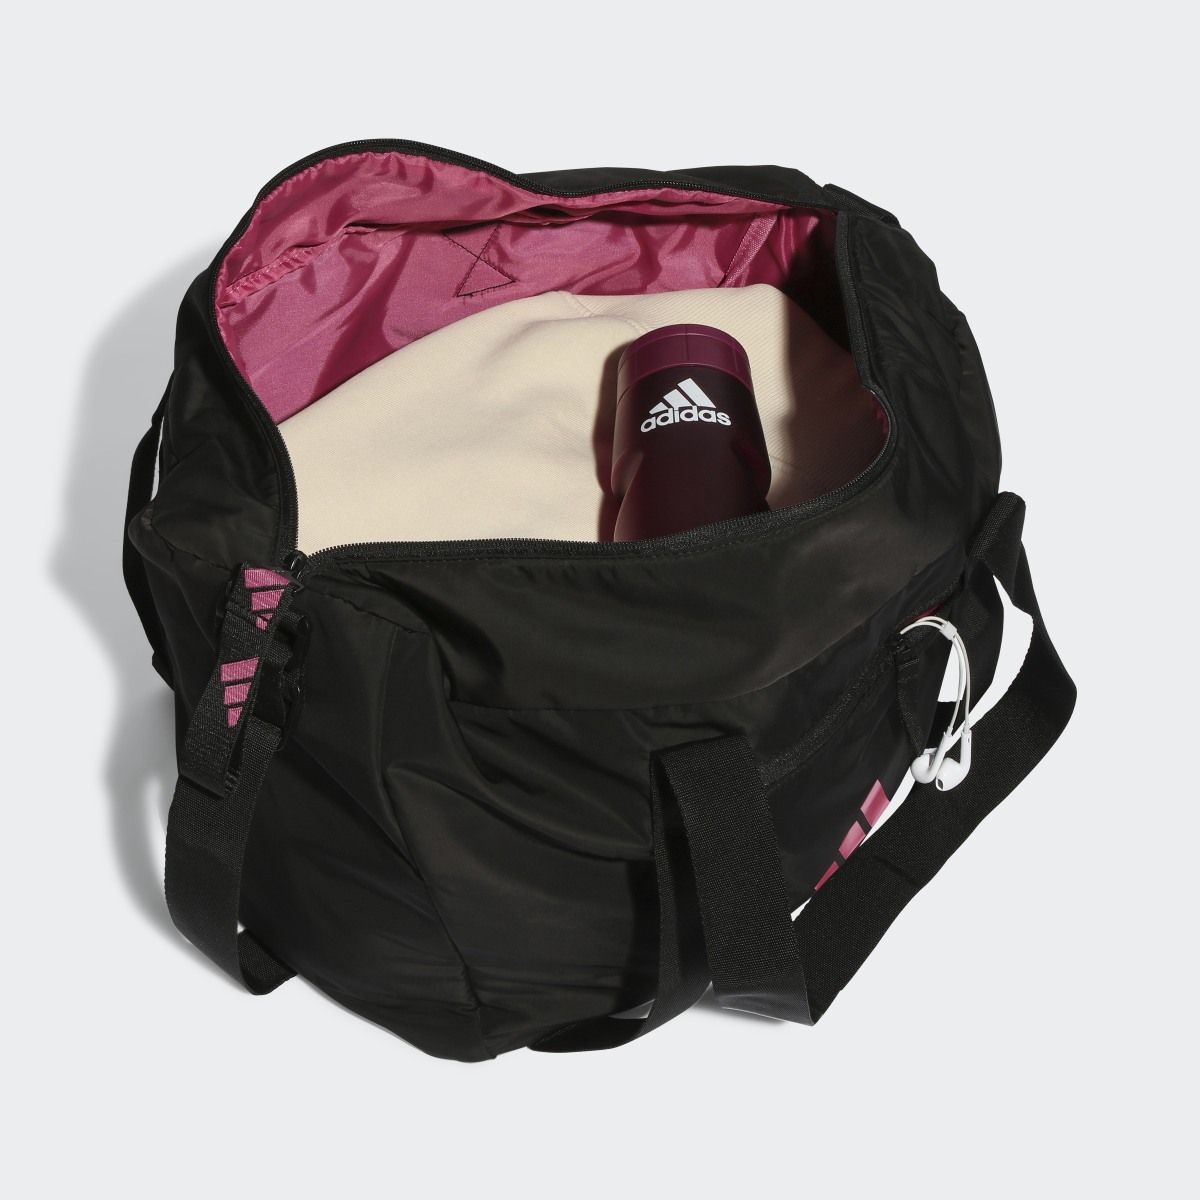 Adidas Sport Bag. 5